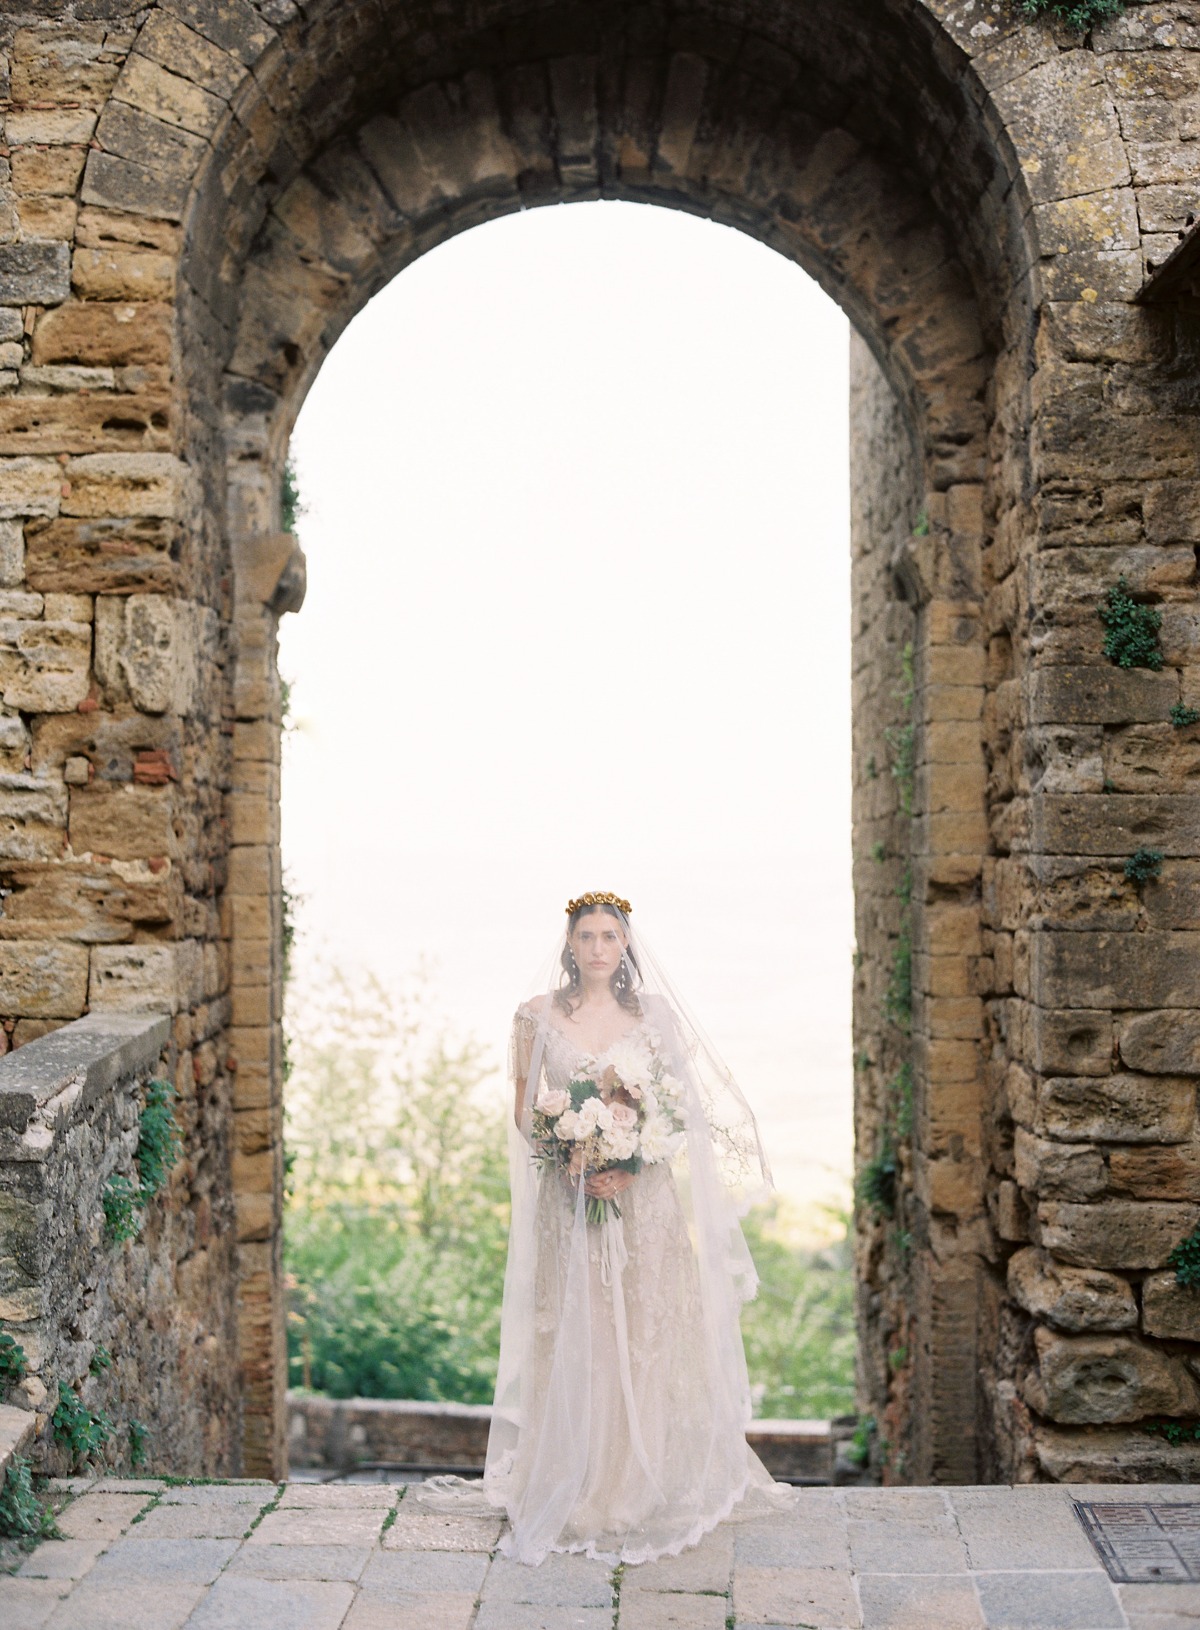 Ethereal Italian bridal fashion for timeless wedding 